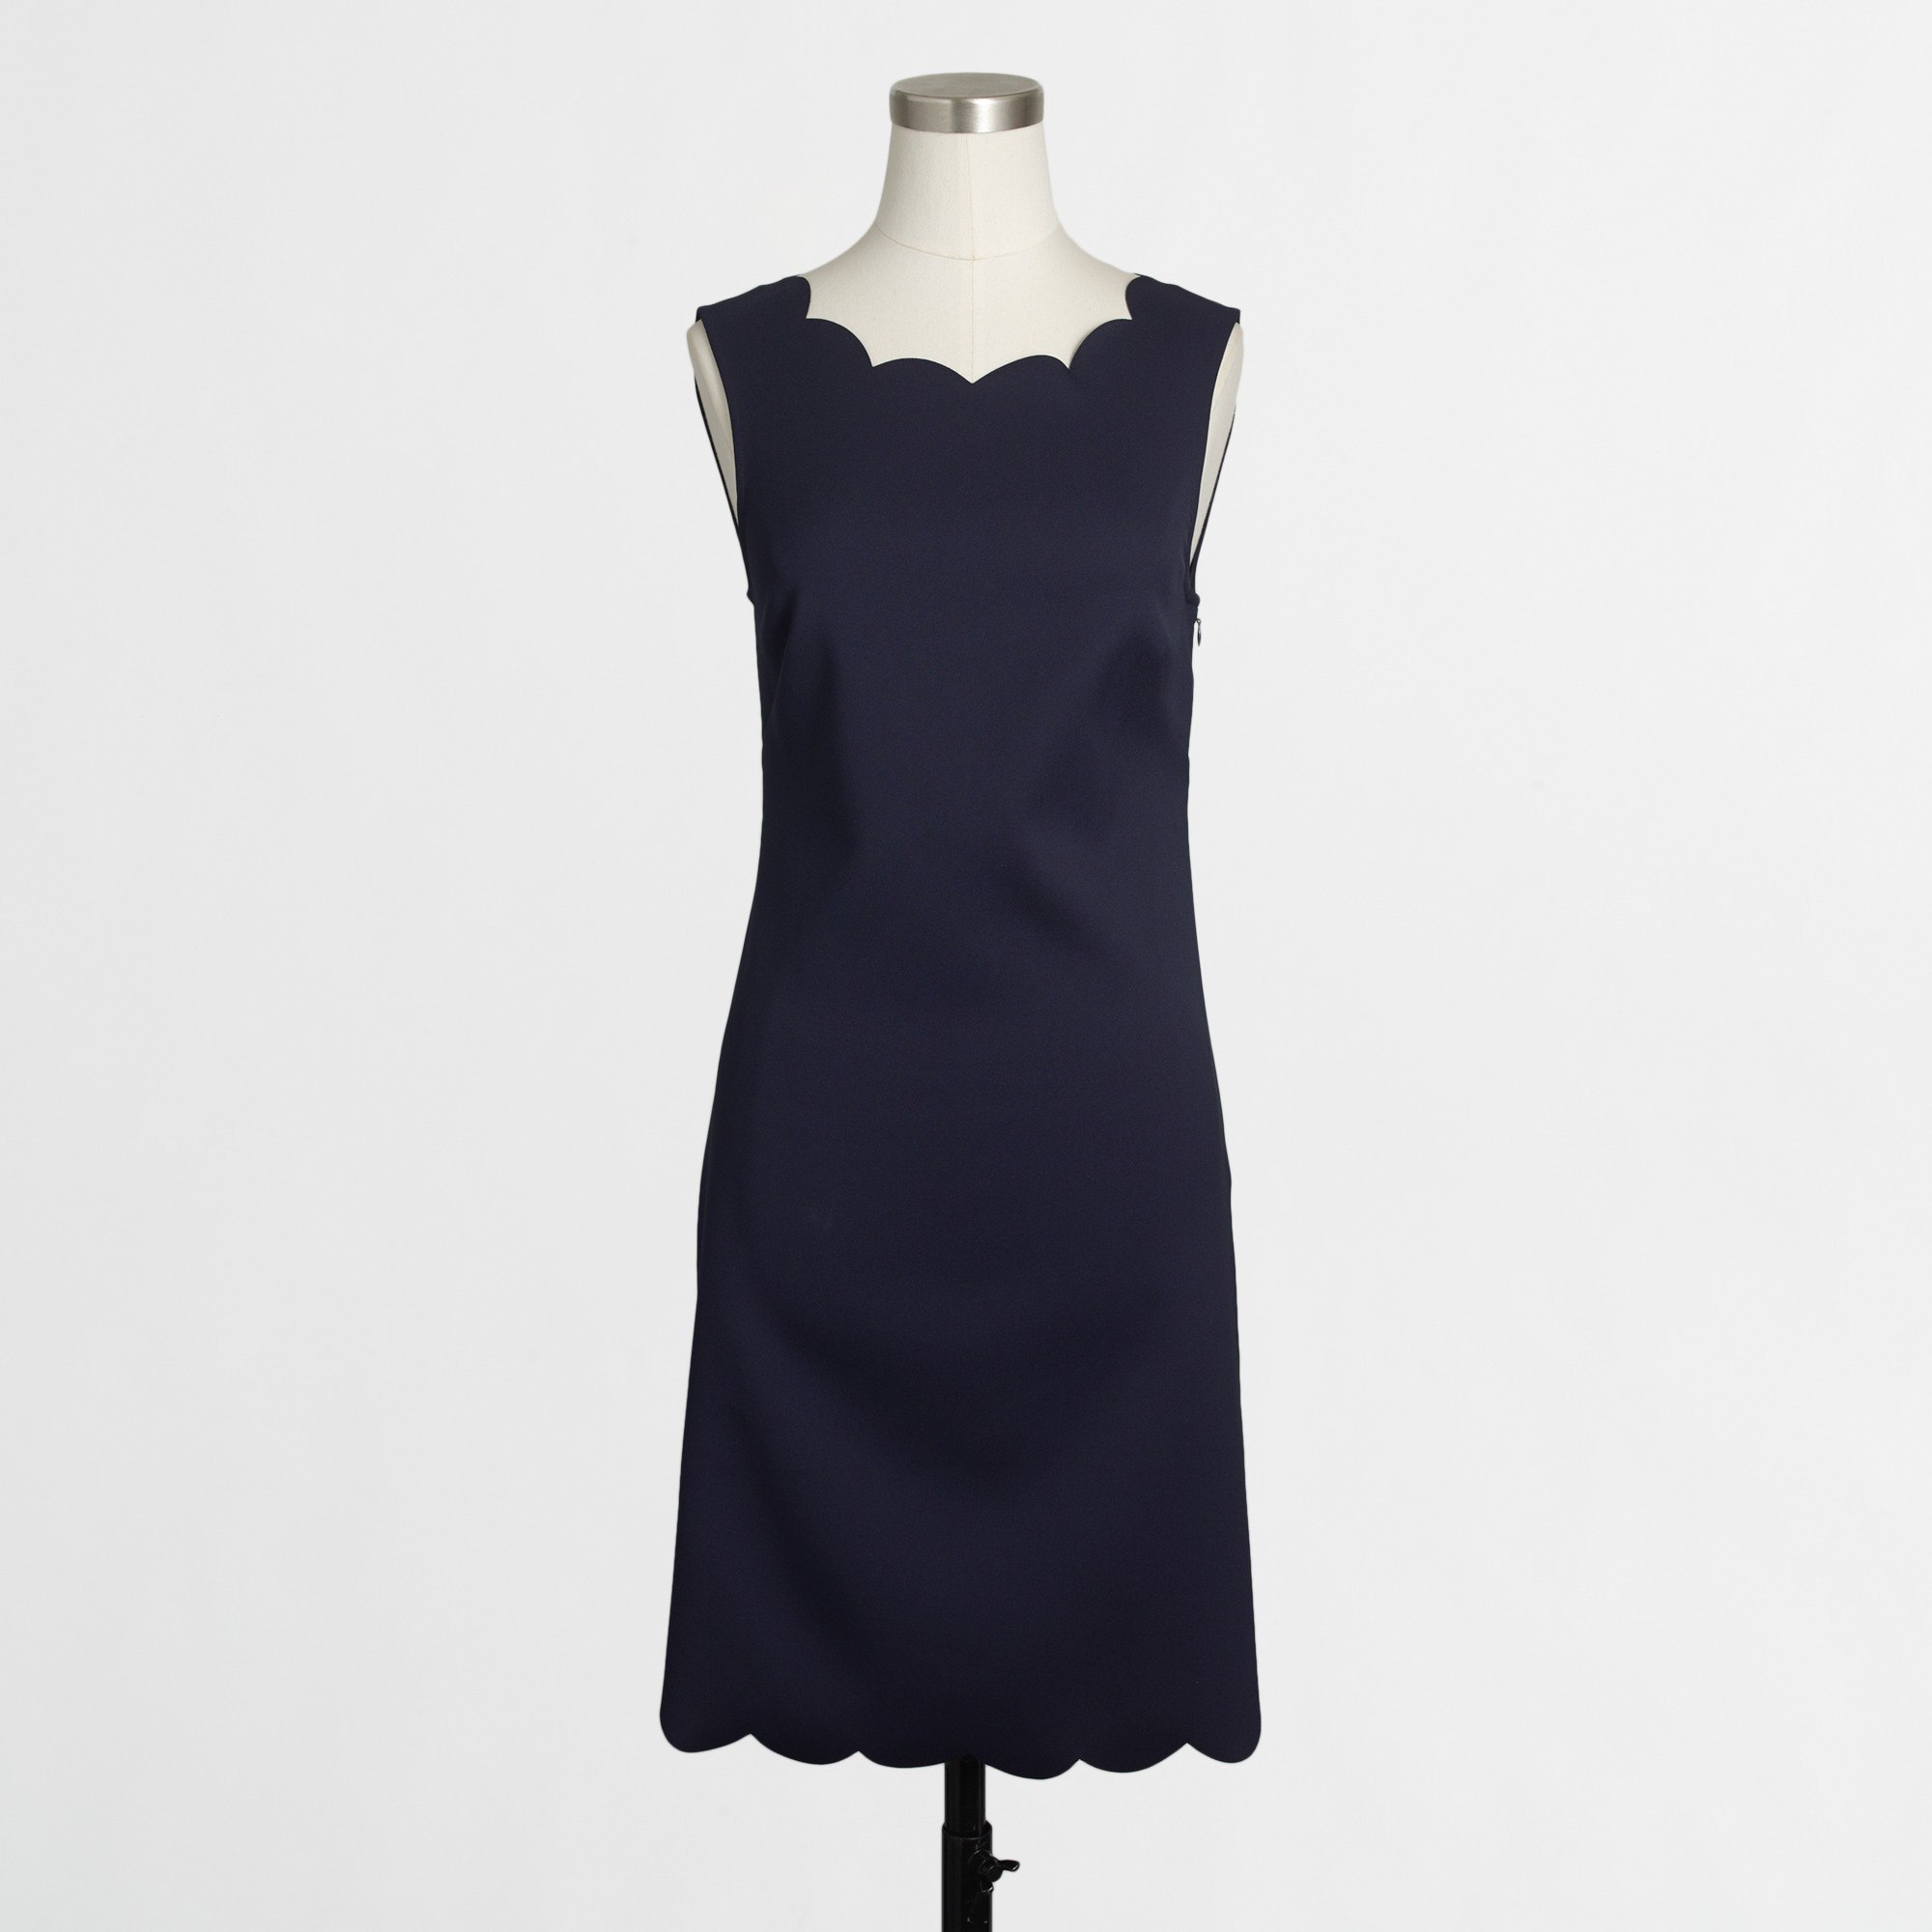 Scalloped trim dress : FactoryWomen Shift Dresses | Factory